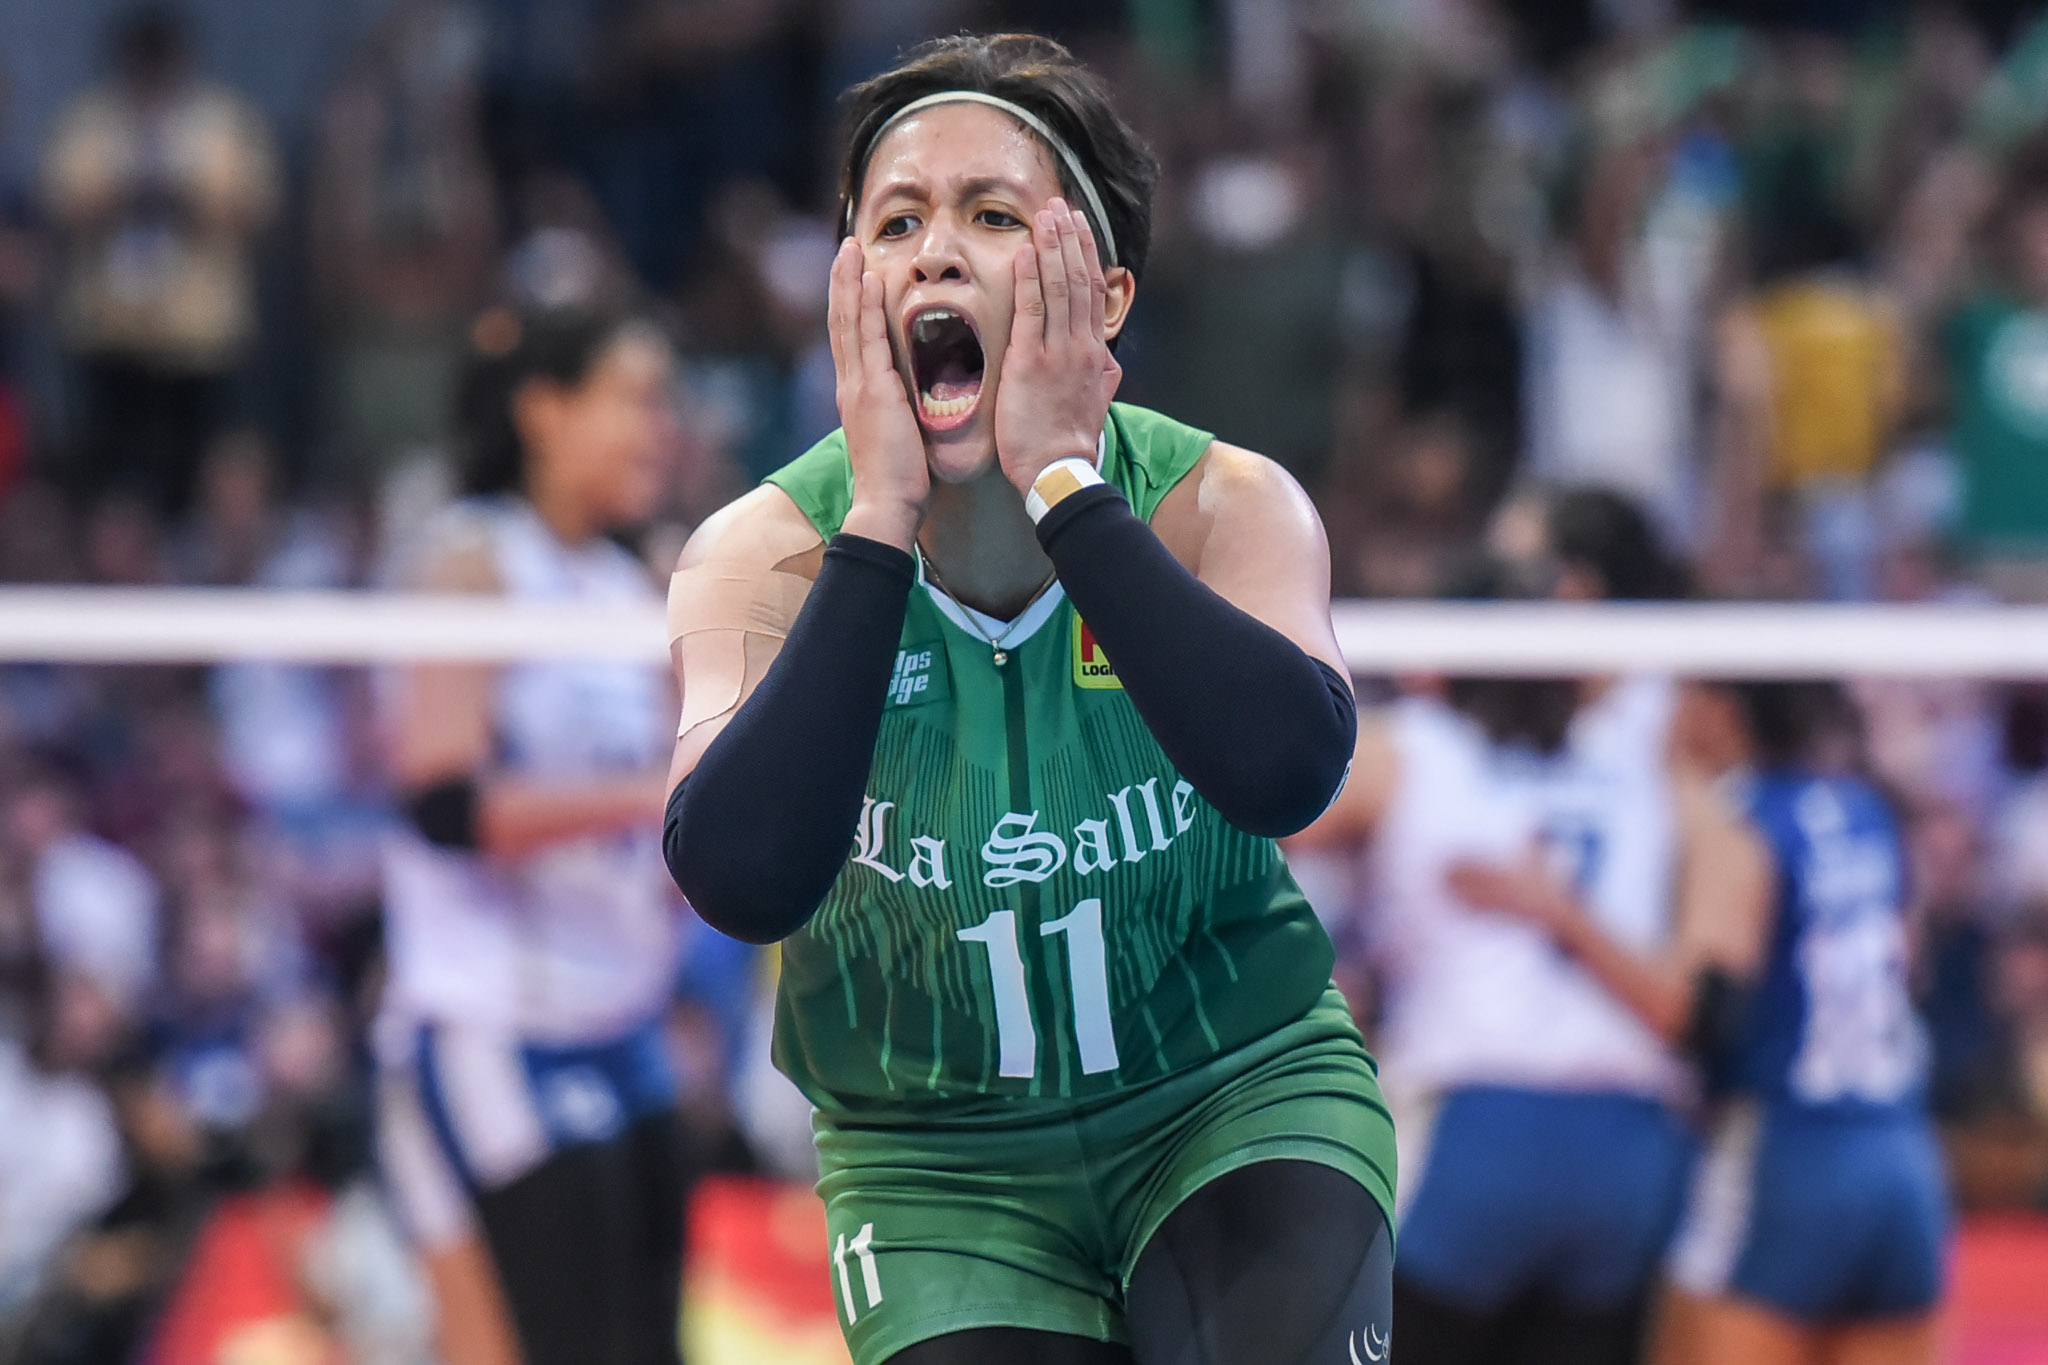 UAAP-85-WVB-Finals-G2-DLSU-vs.-NU-Mars-Alba-1924 Mars Alba, Jolina Dela Cruz fulfill promise to give crown back to La Salle DLSU News UAAP Volleyball  - philippine sports news